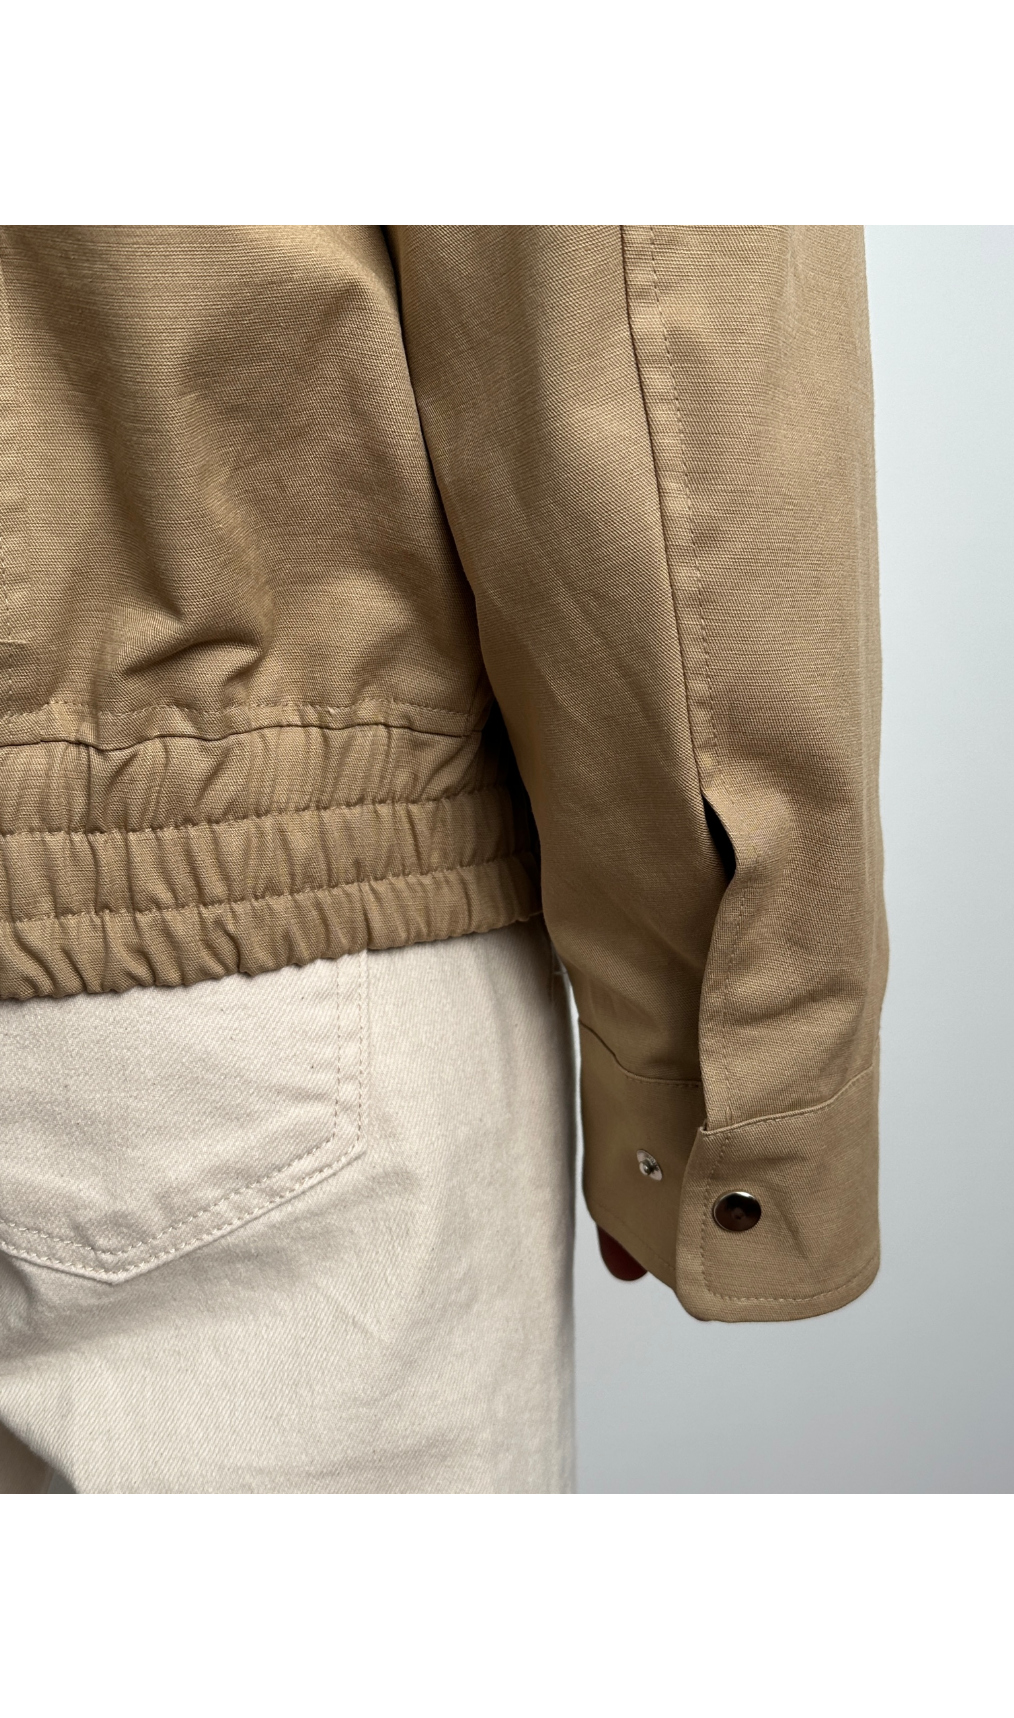 jacket detail image-S1L24